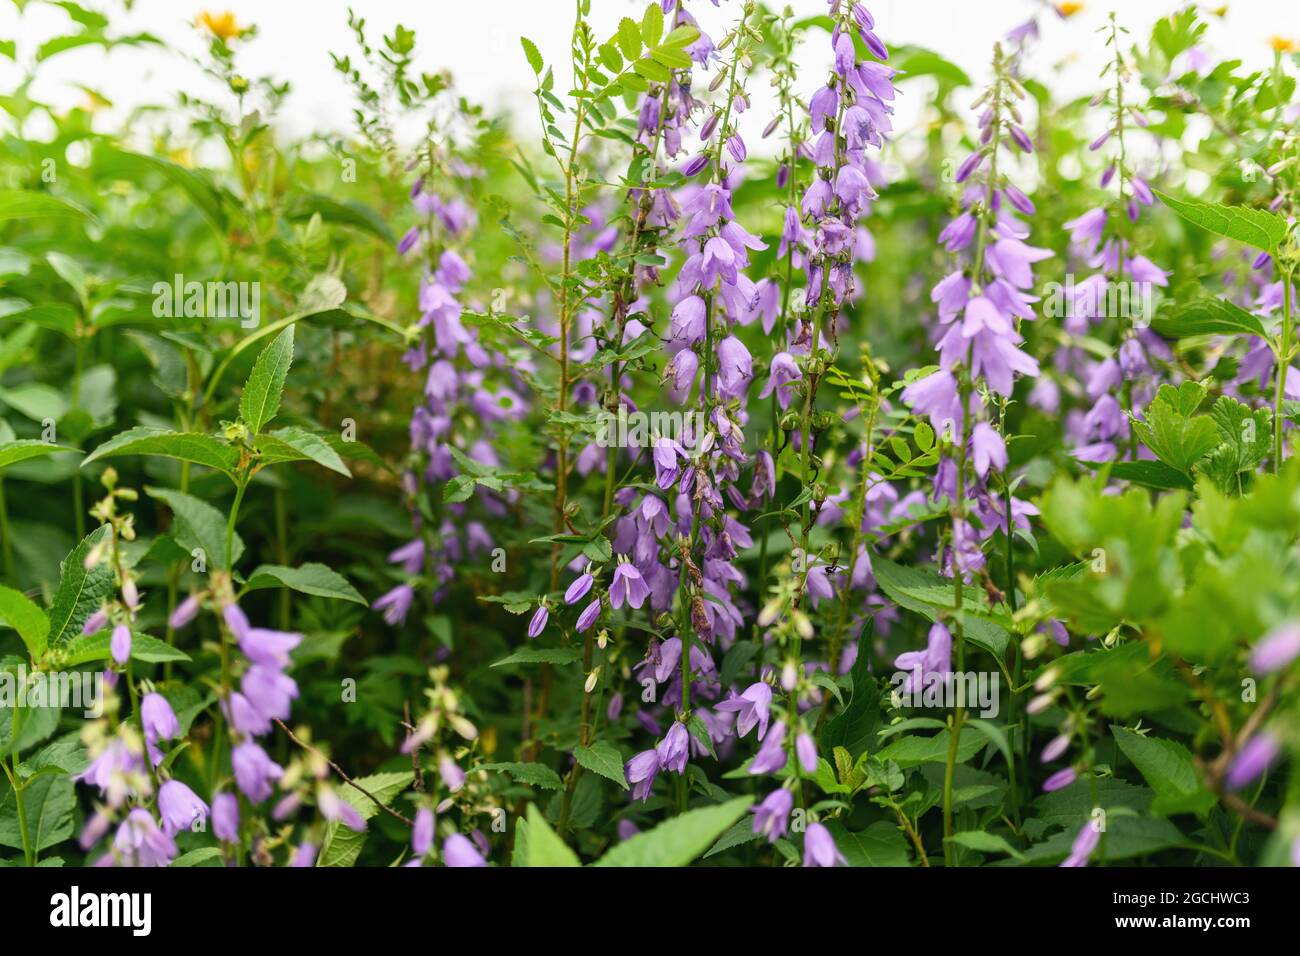 Close-up purple flowers in garden. Stock Photo